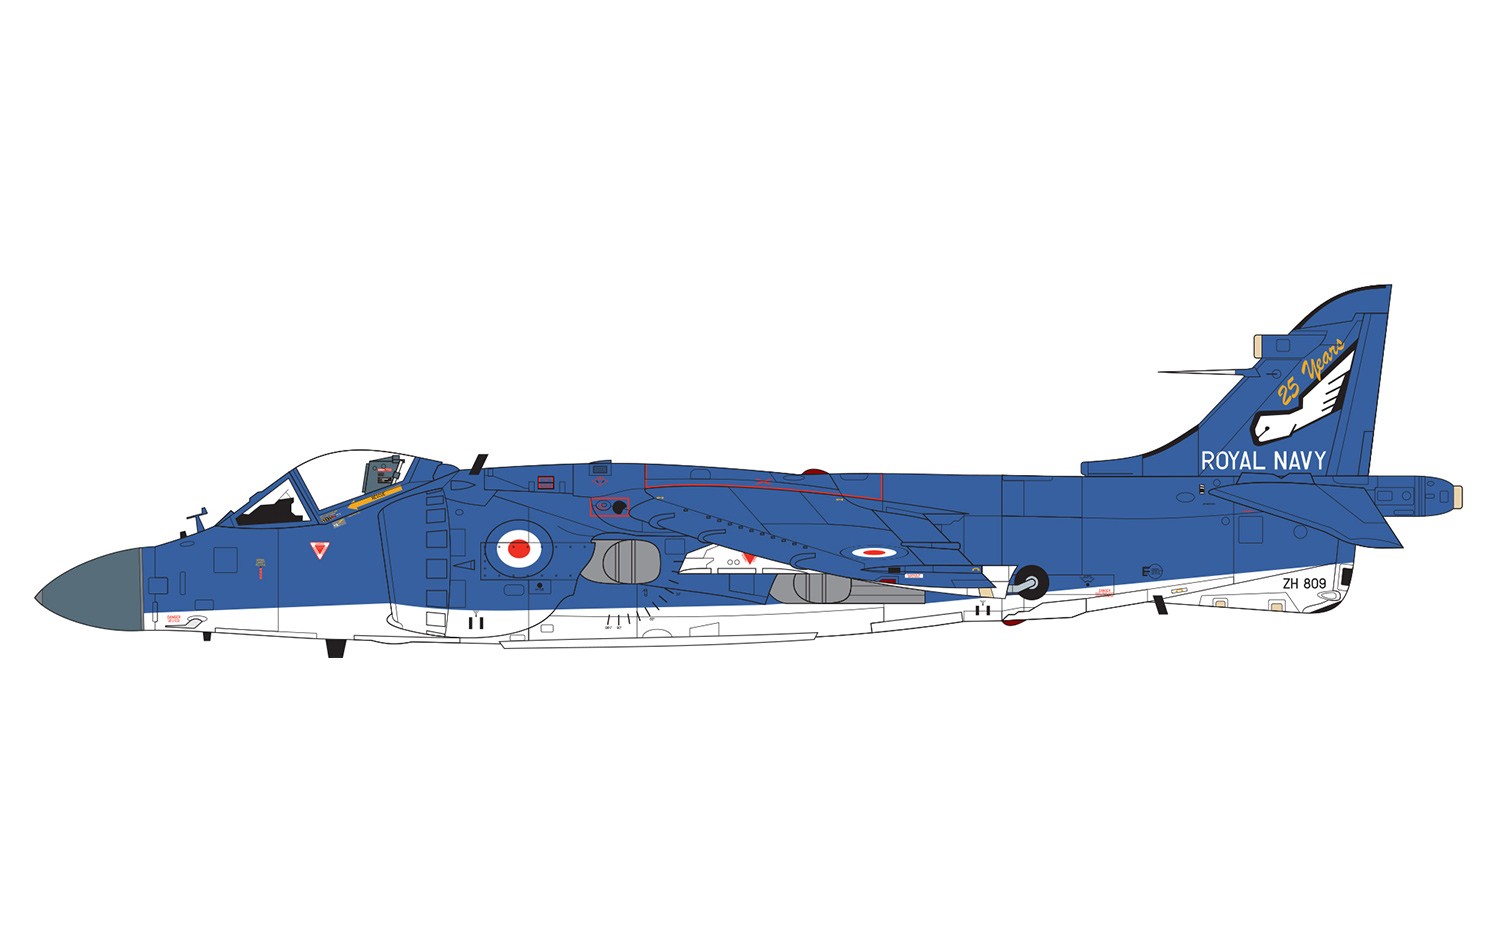 Naval Models - plastic modelbouw vliegtuigen - Airfix - A04052A Bae Sea Harrier FA2